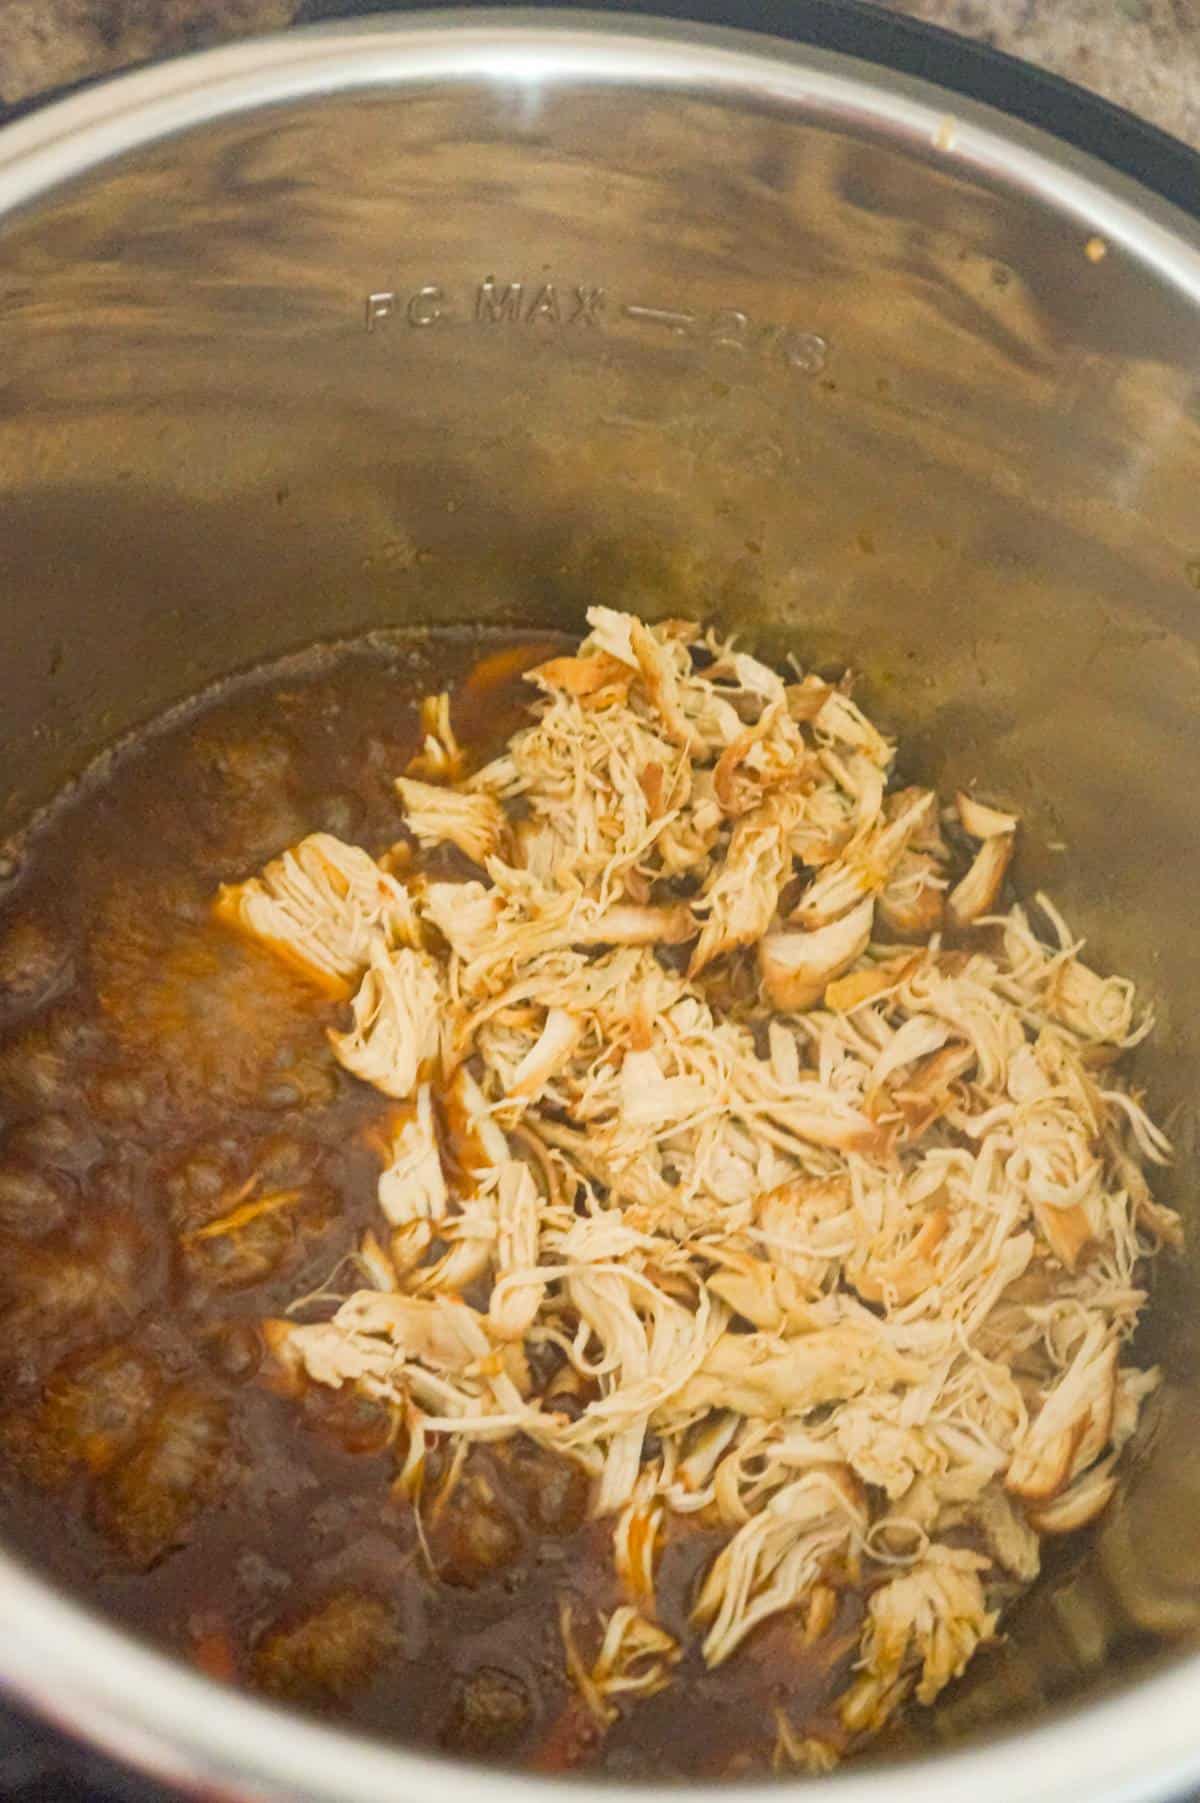 shredded chicken added to honey garlic sauce in an Instant Pot